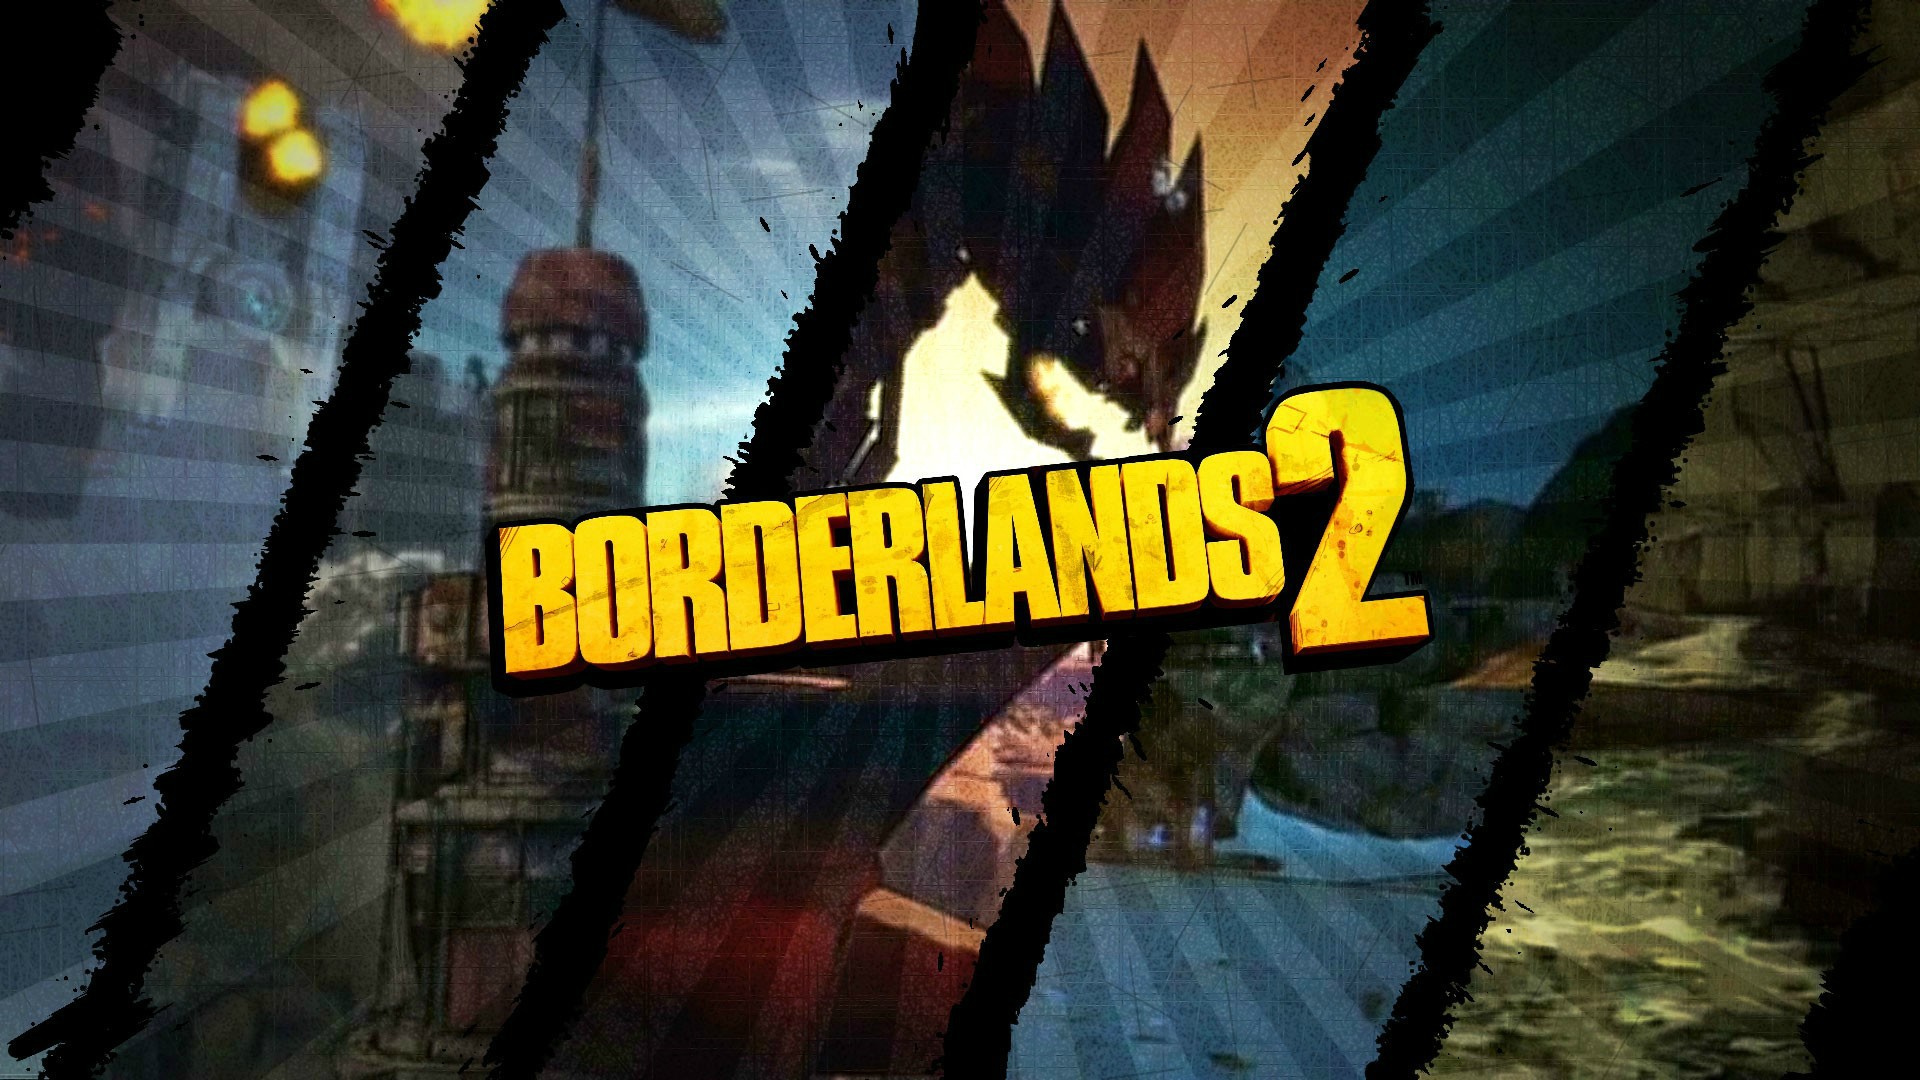 Gaming wallpaper games borderlands 2